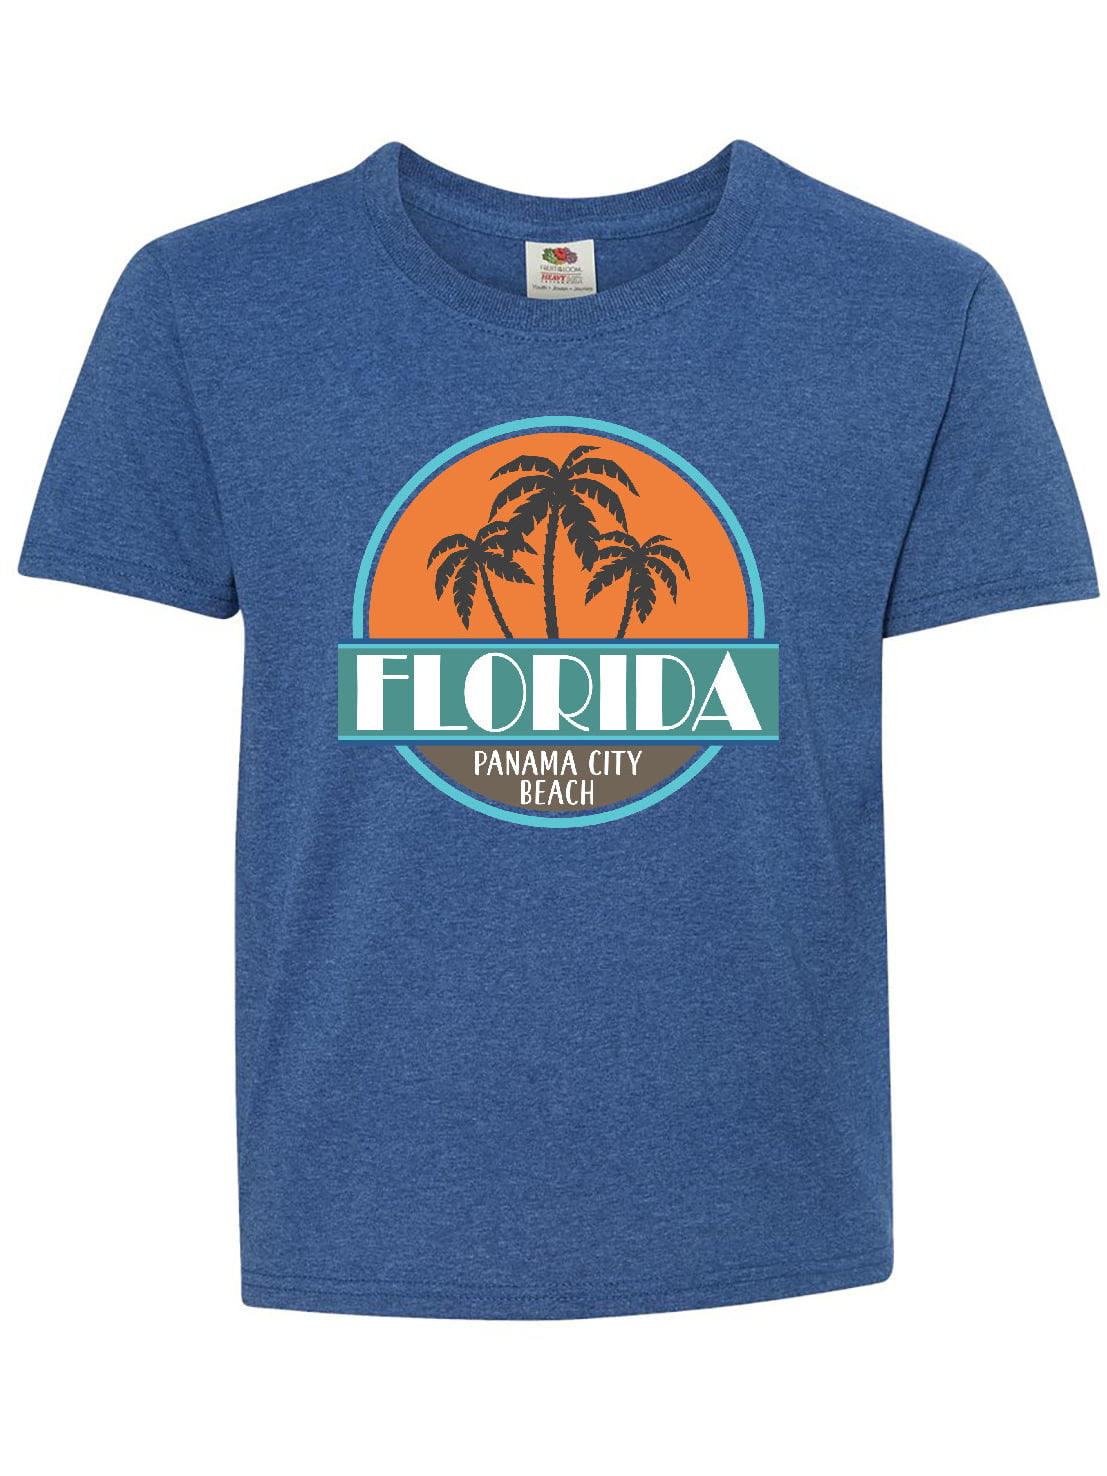 Panama City Beach Florida Youth T-Shirt - Walmart.com - Walmart.com